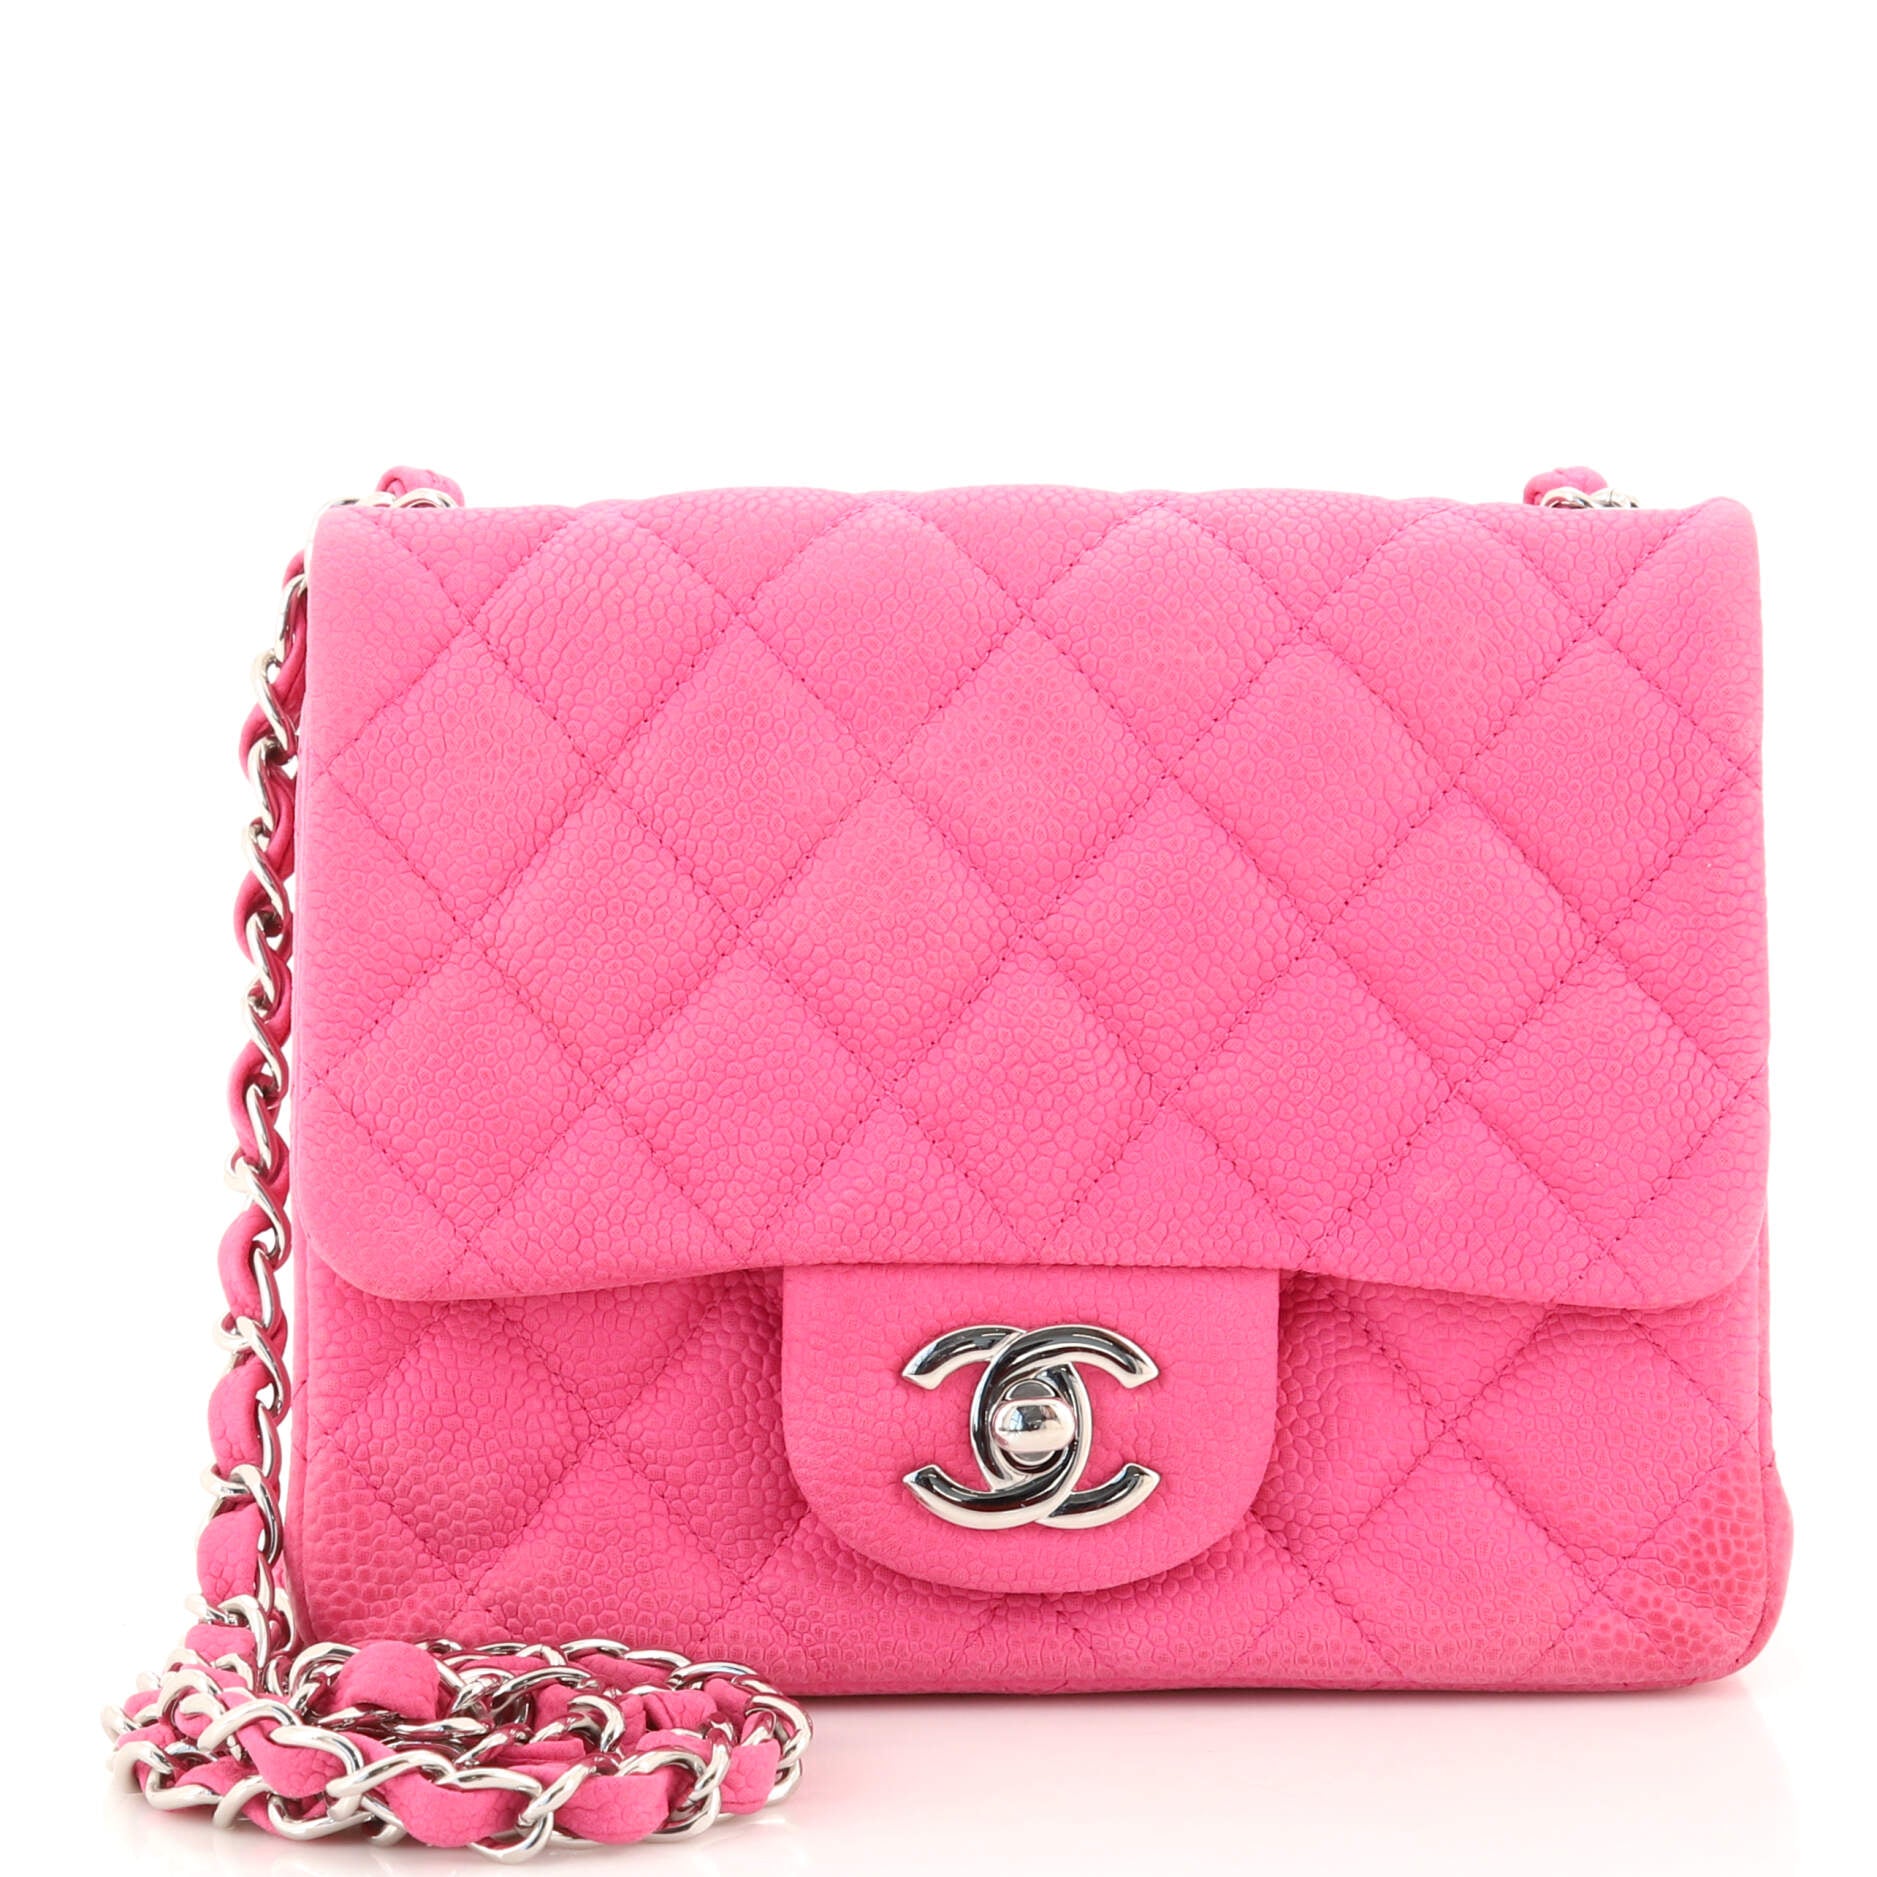 CHANEL, Bags, Chanel Hot Pink Tweed Mini Flap Bag